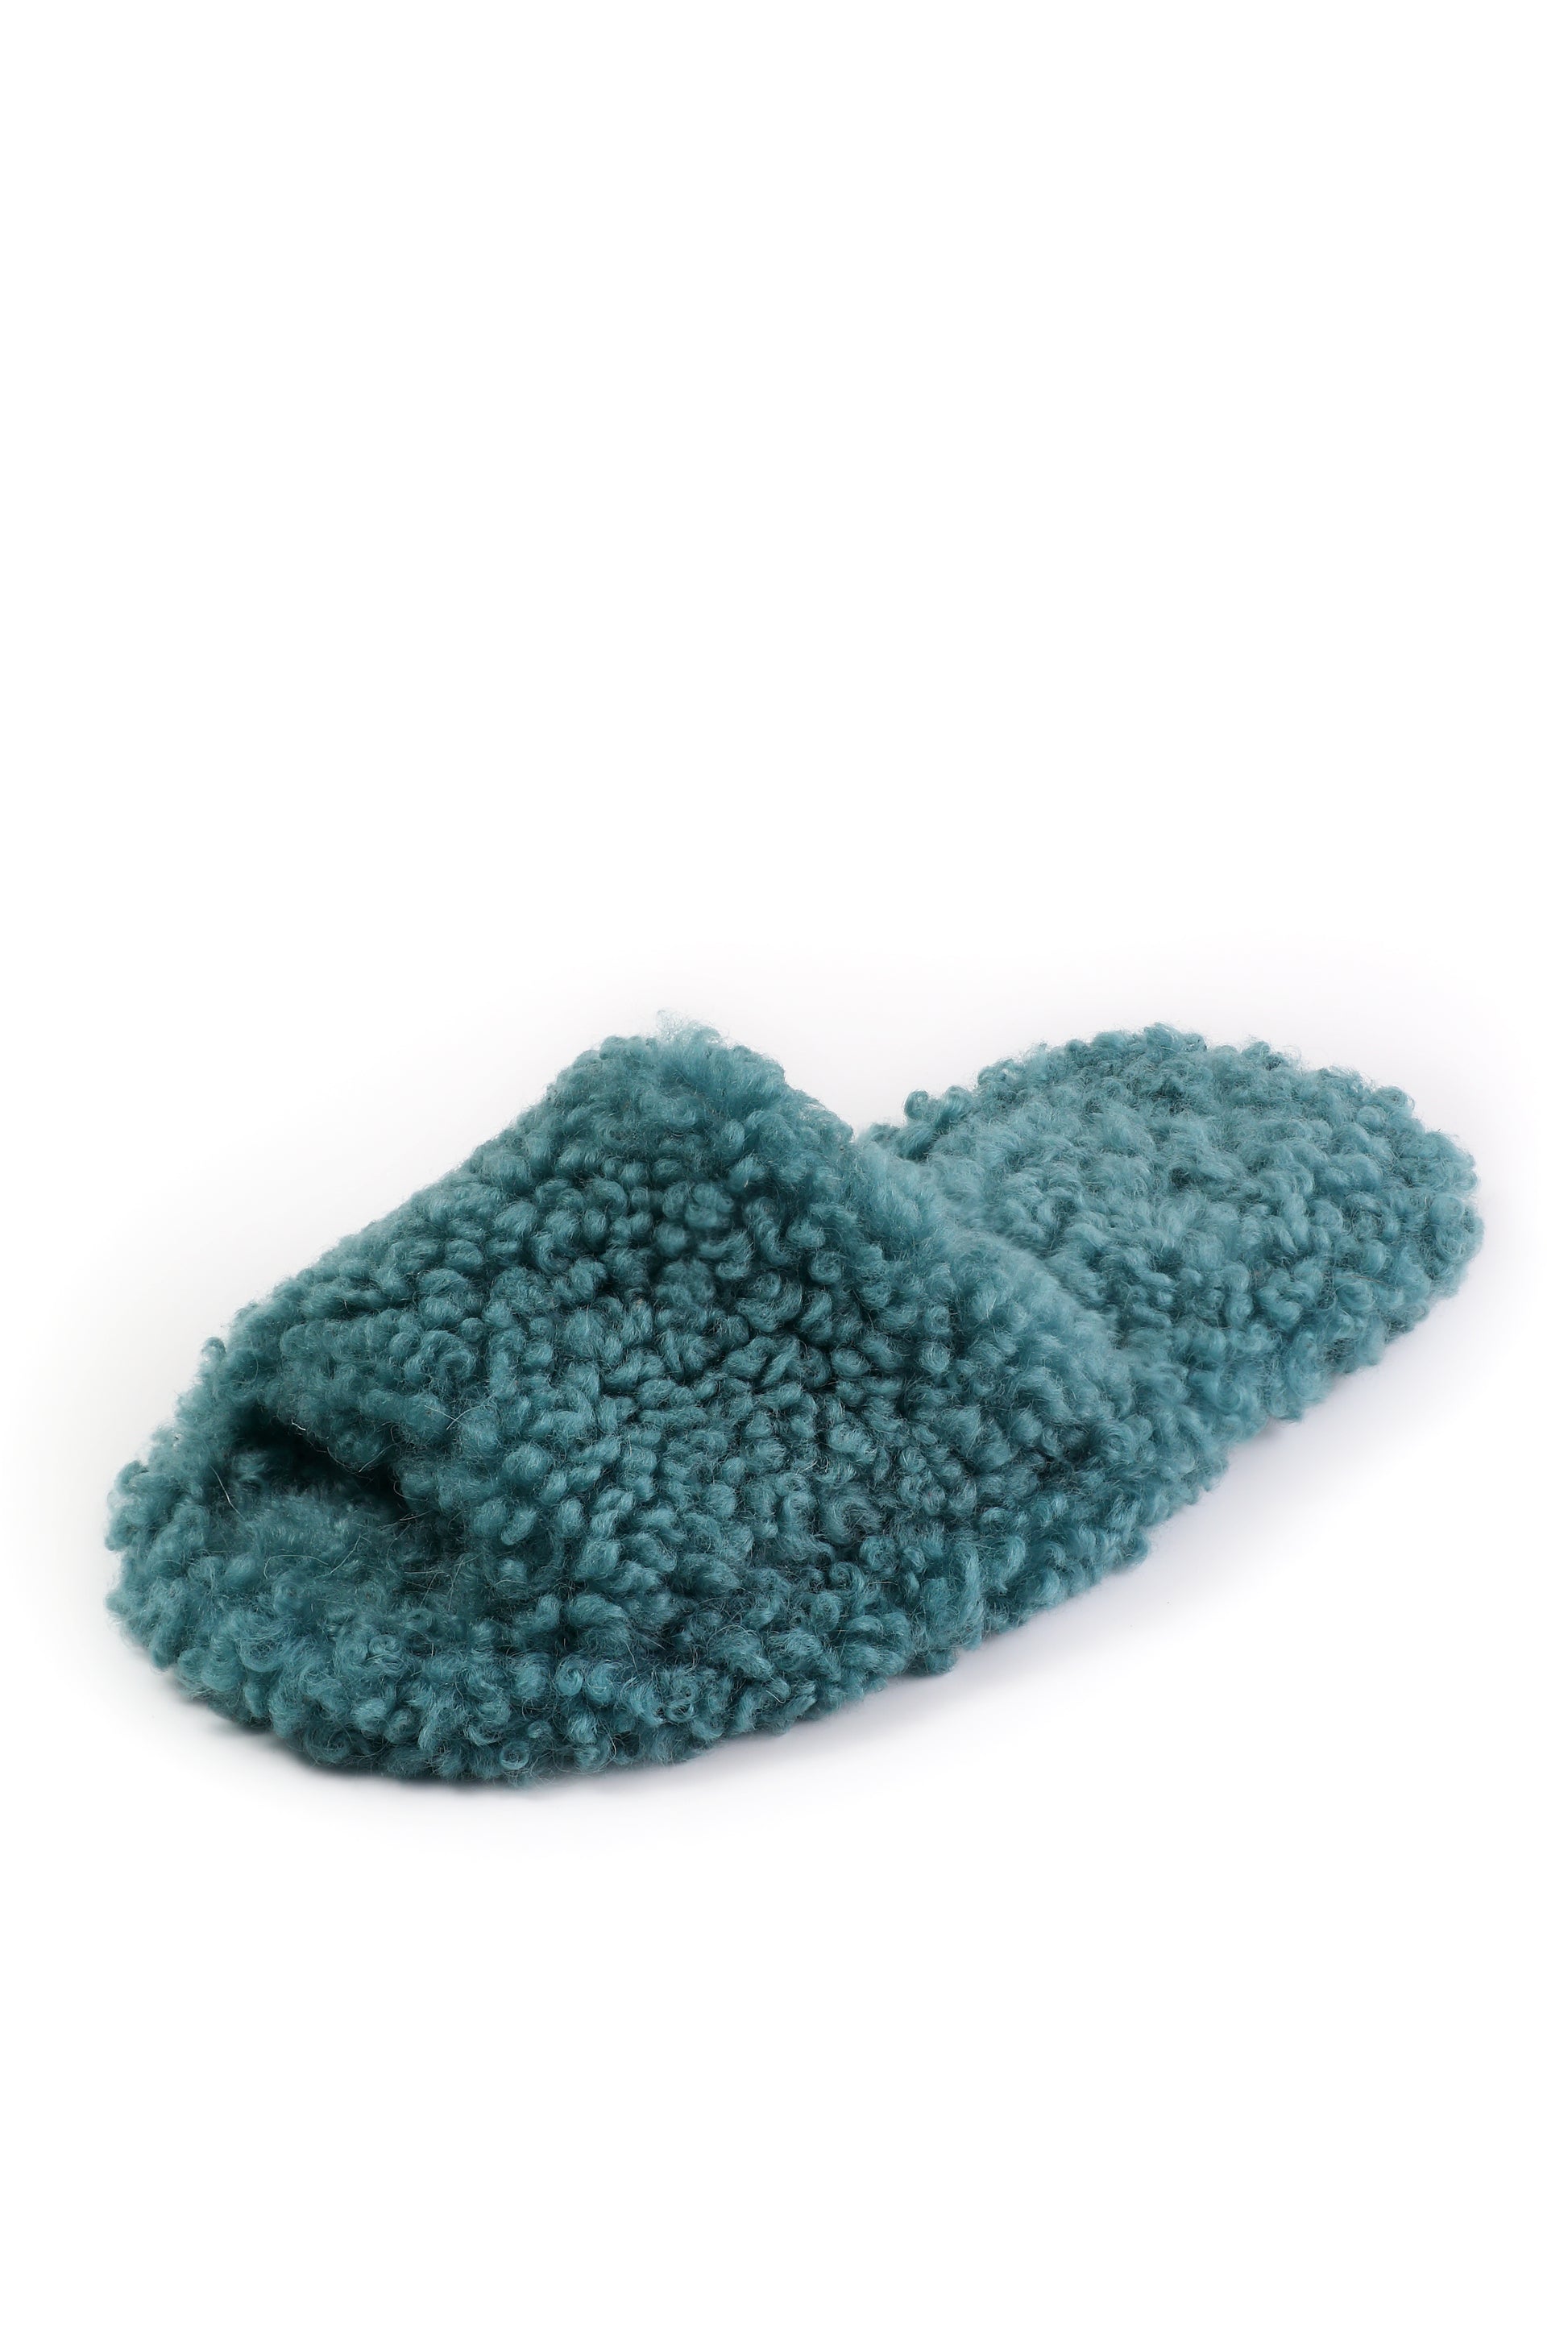 Open Toe Soft Tiffany Blue Sheepskin Slippers for Women with Blue Fur Lining